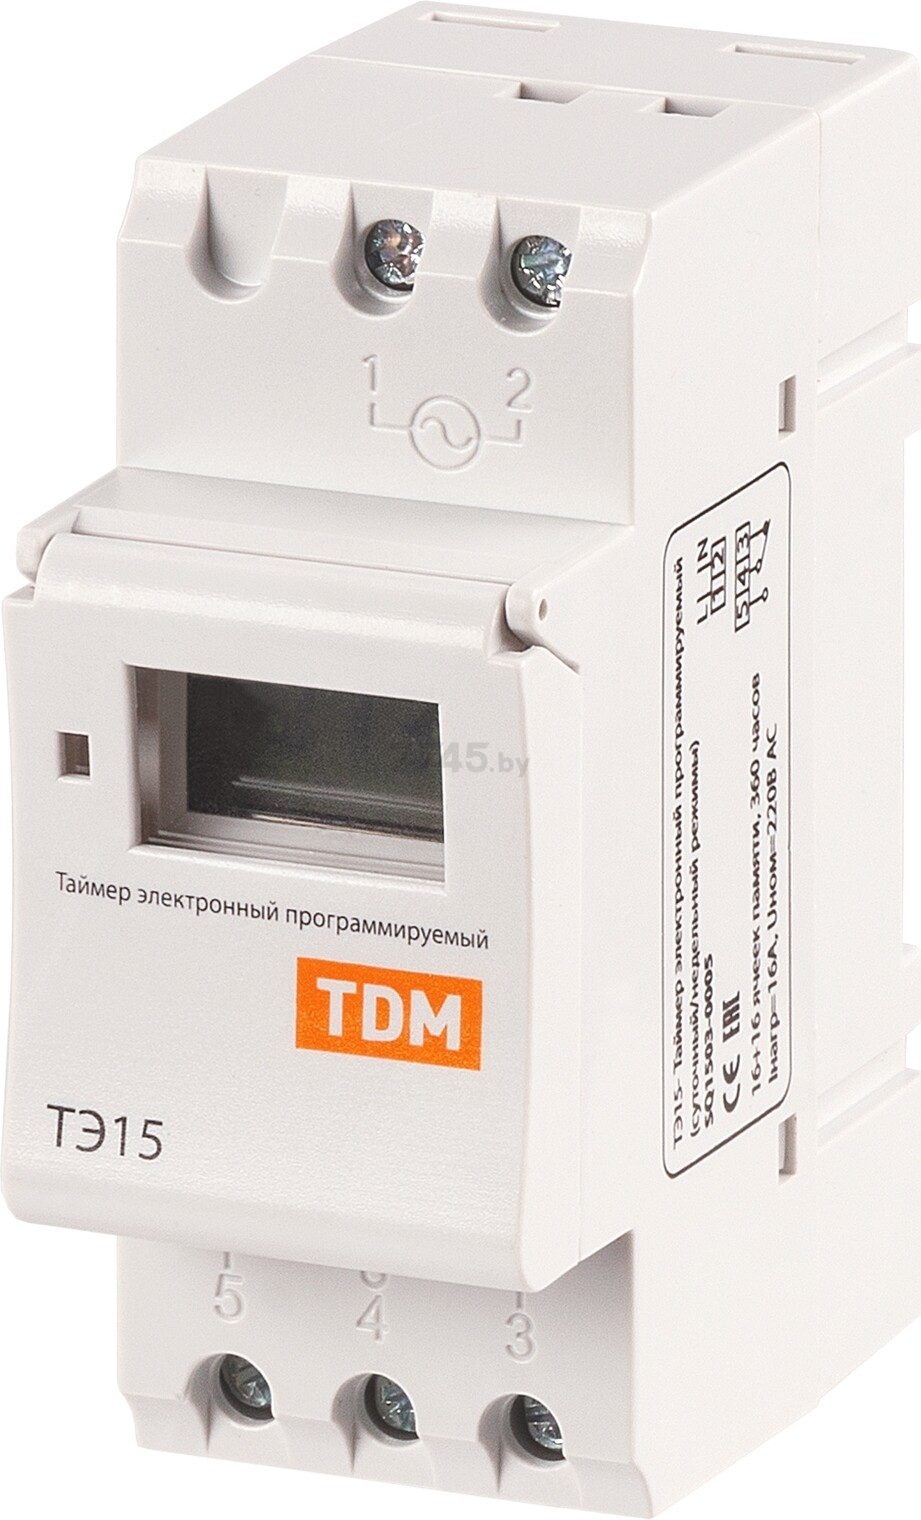 Таймер электронный программируемый TDM ТЭ15 (SQ1503-0005) - Фото 2